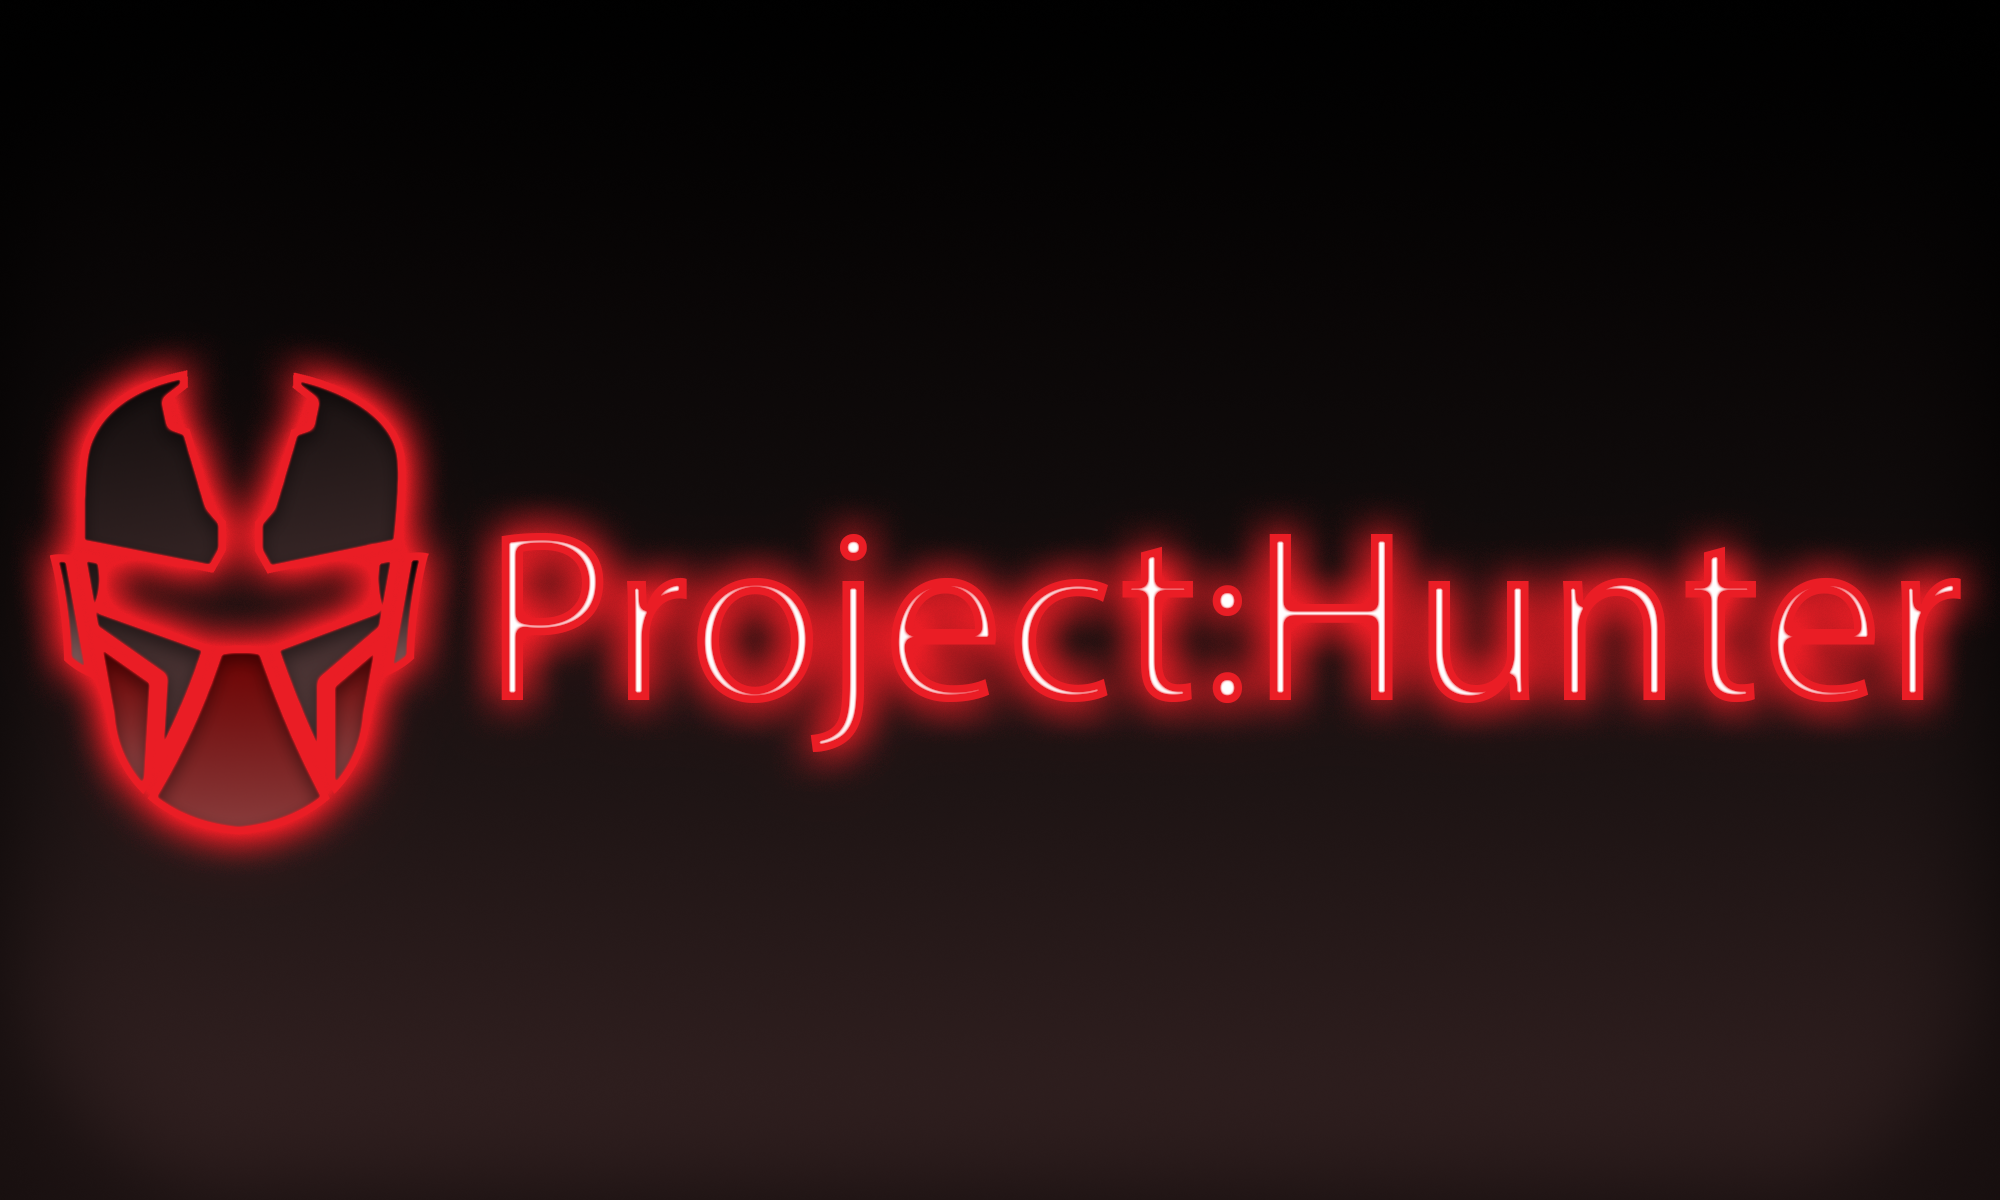 Project:Hunter